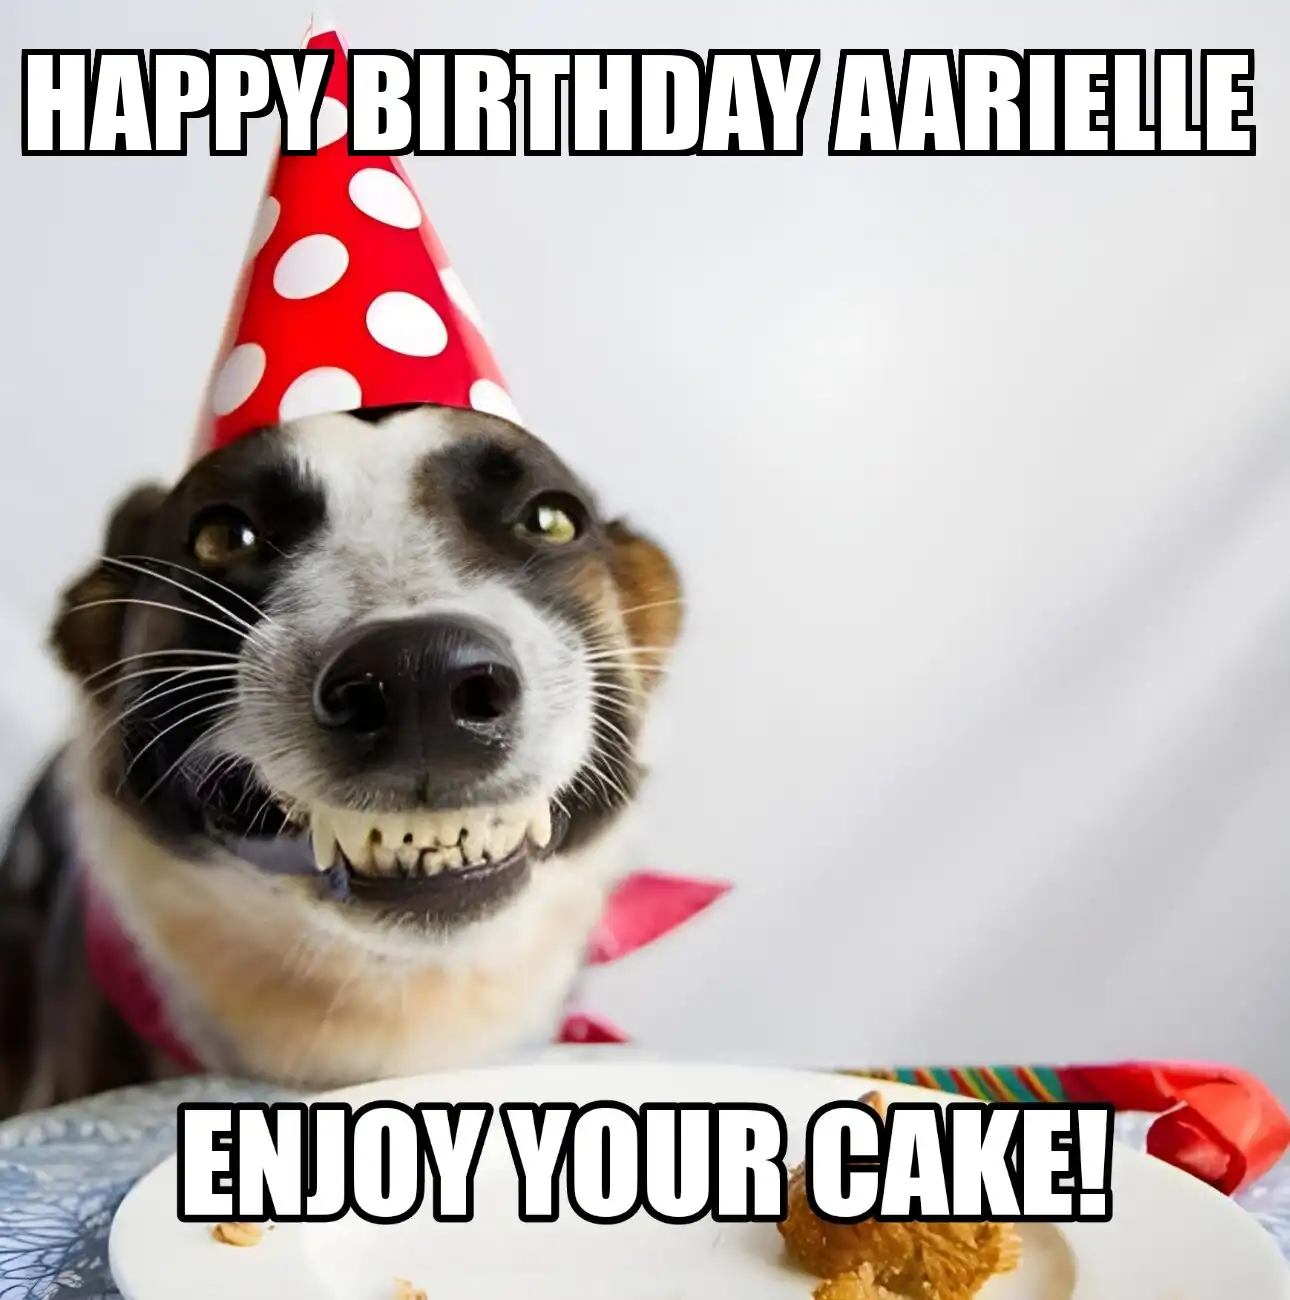 Happy Birthday Aarielle Enjoy Your Cake Dog Meme